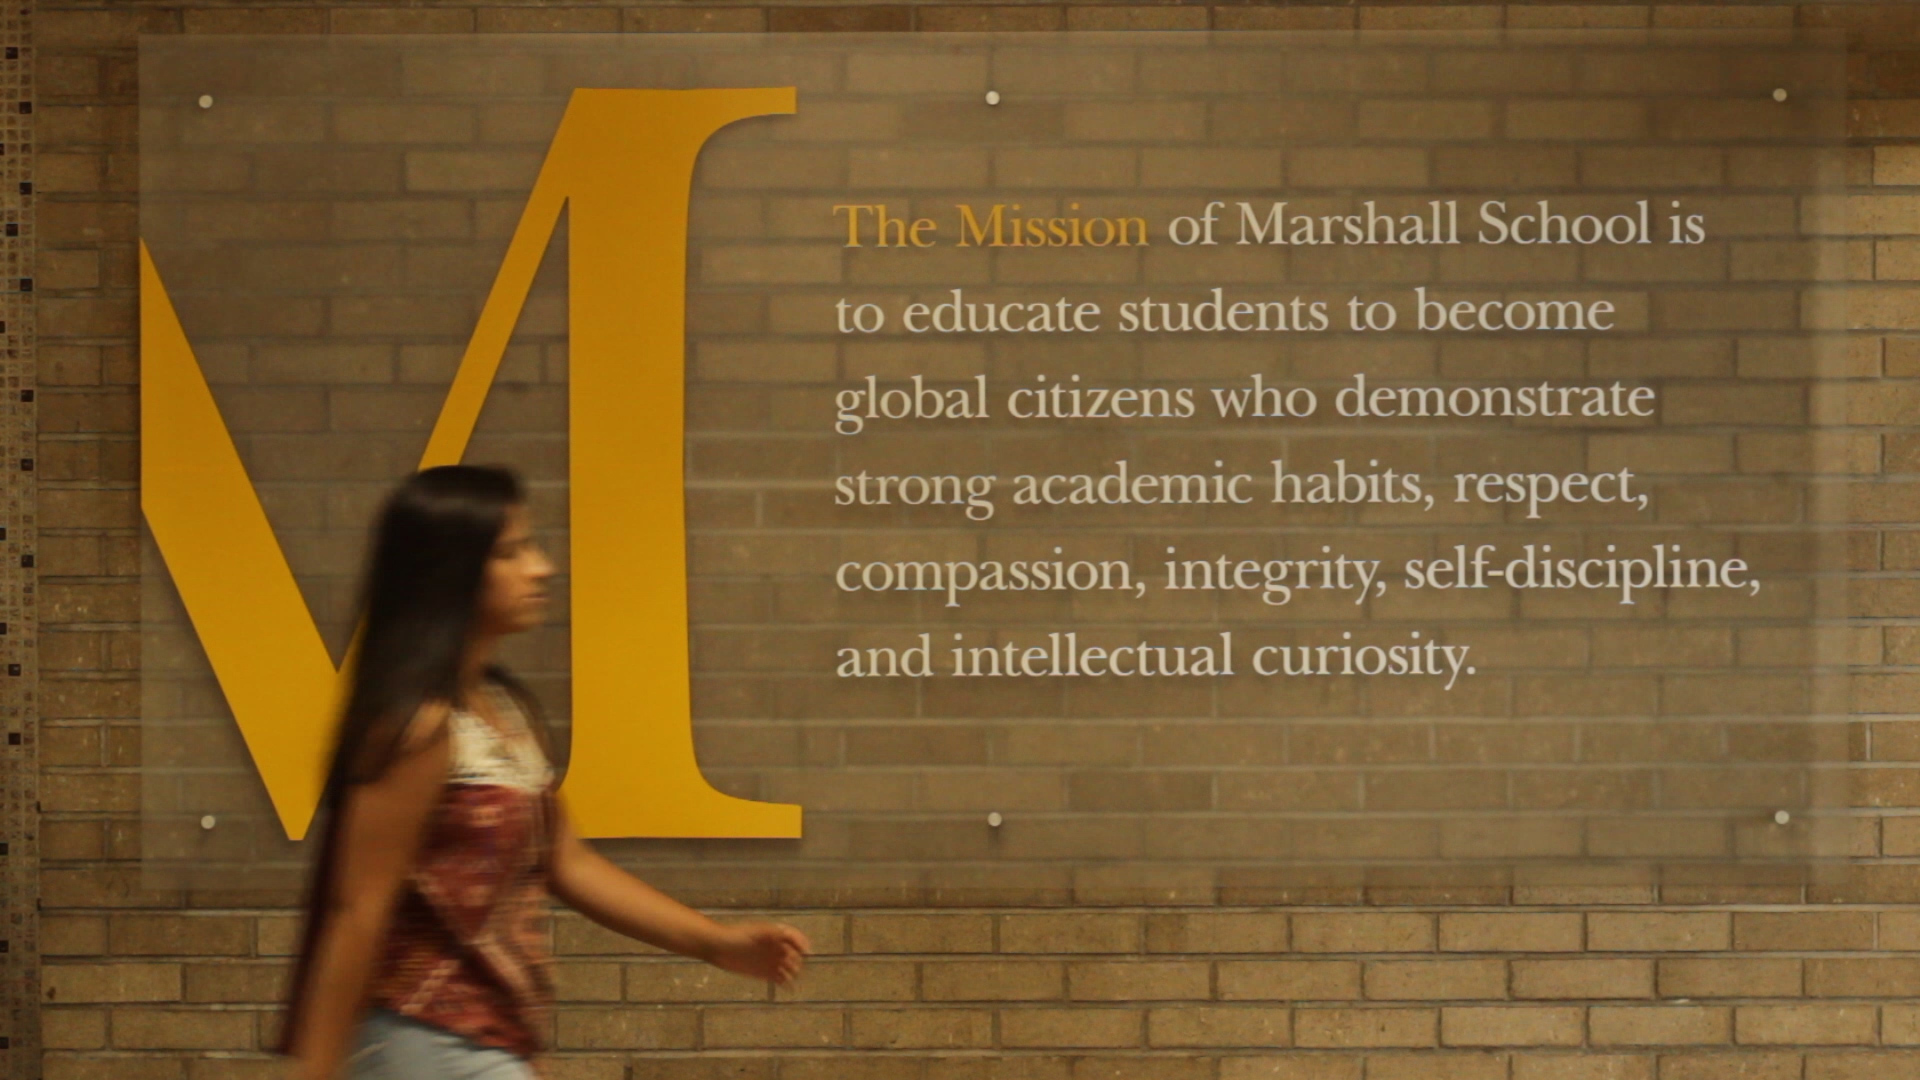 Marshall School